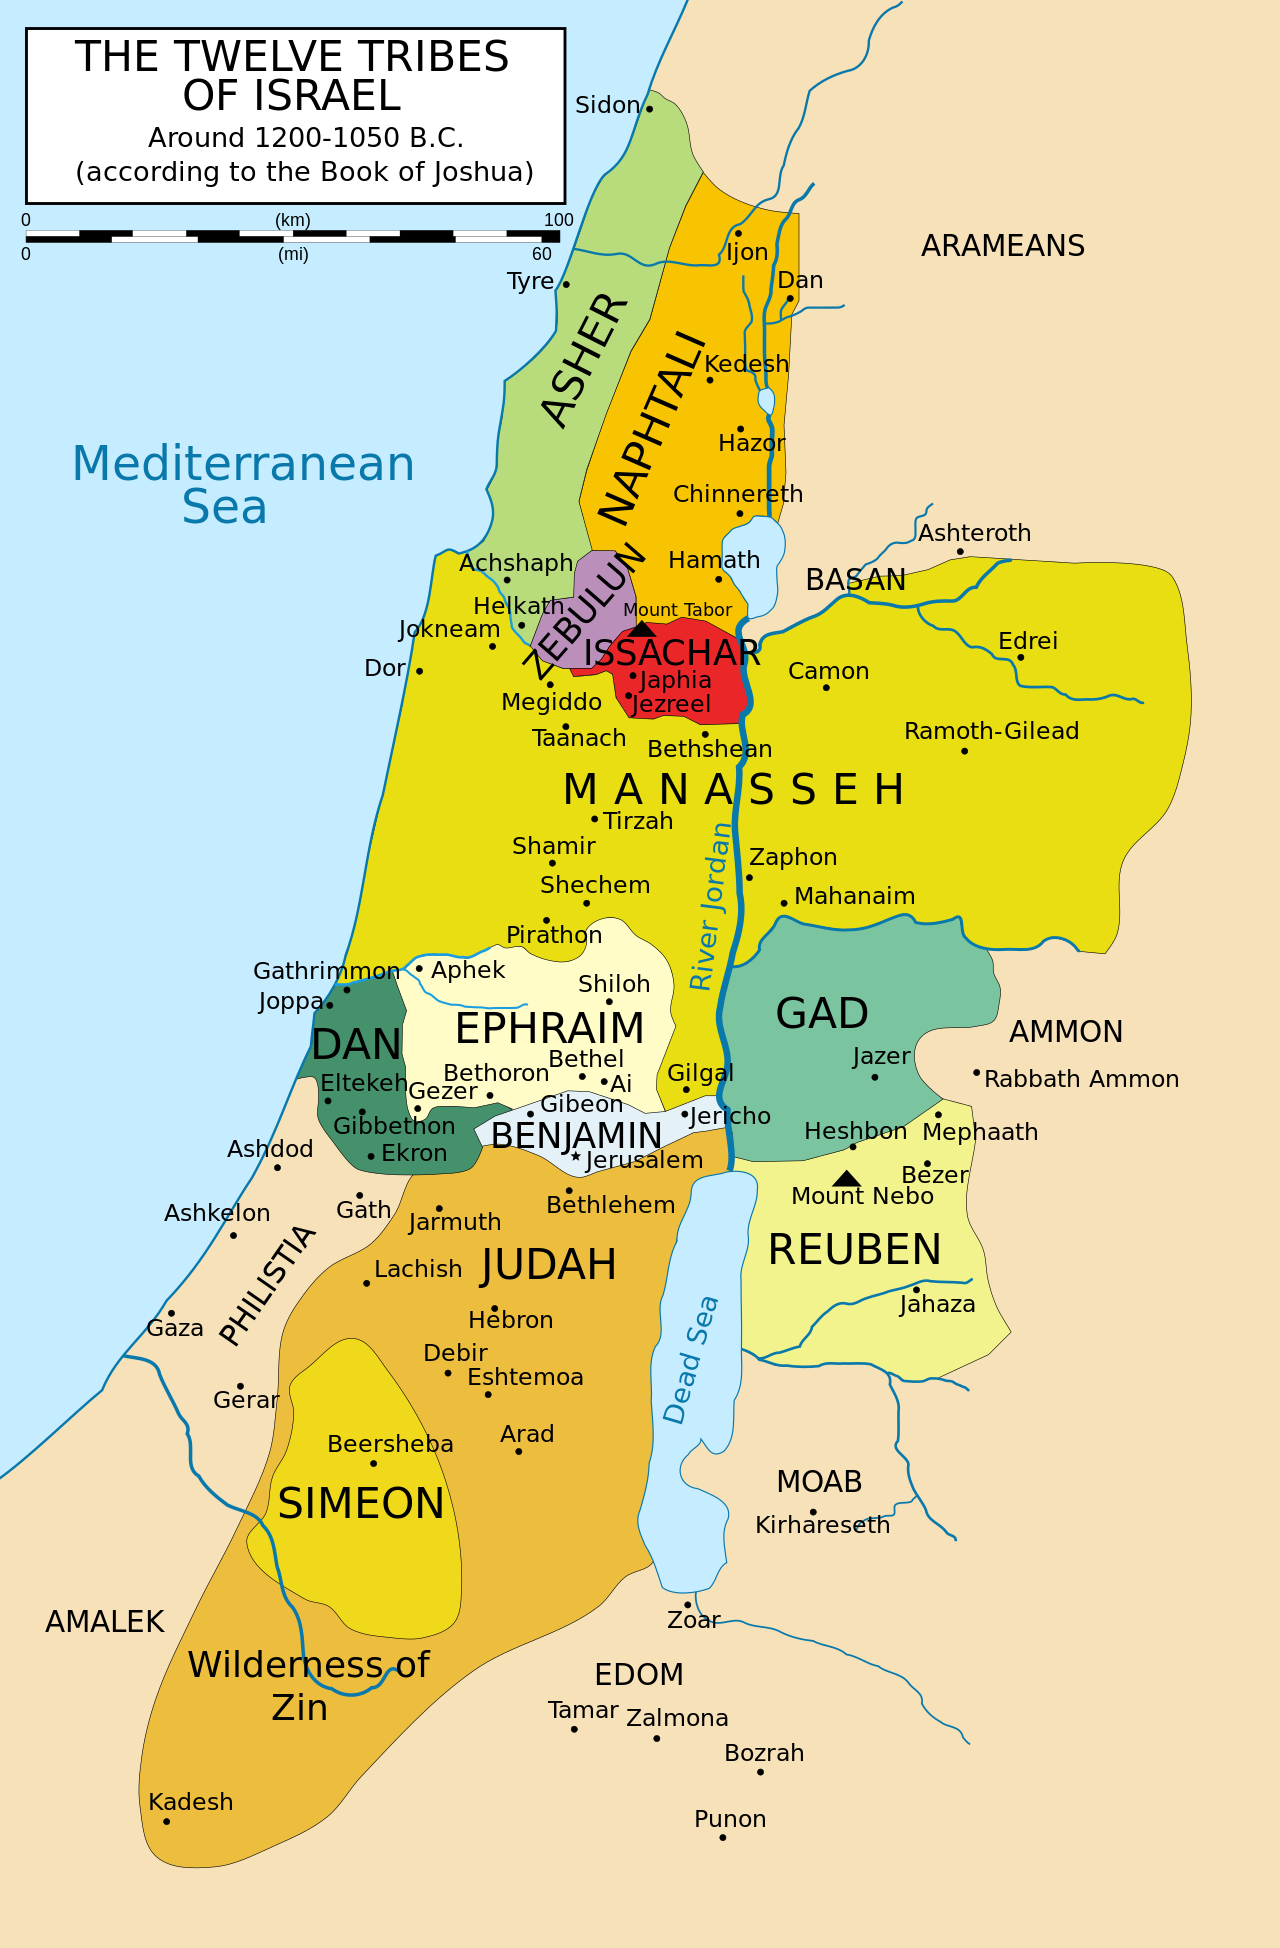 Карта на дванадесетте племена на Израел според Книгата на Исус Навин